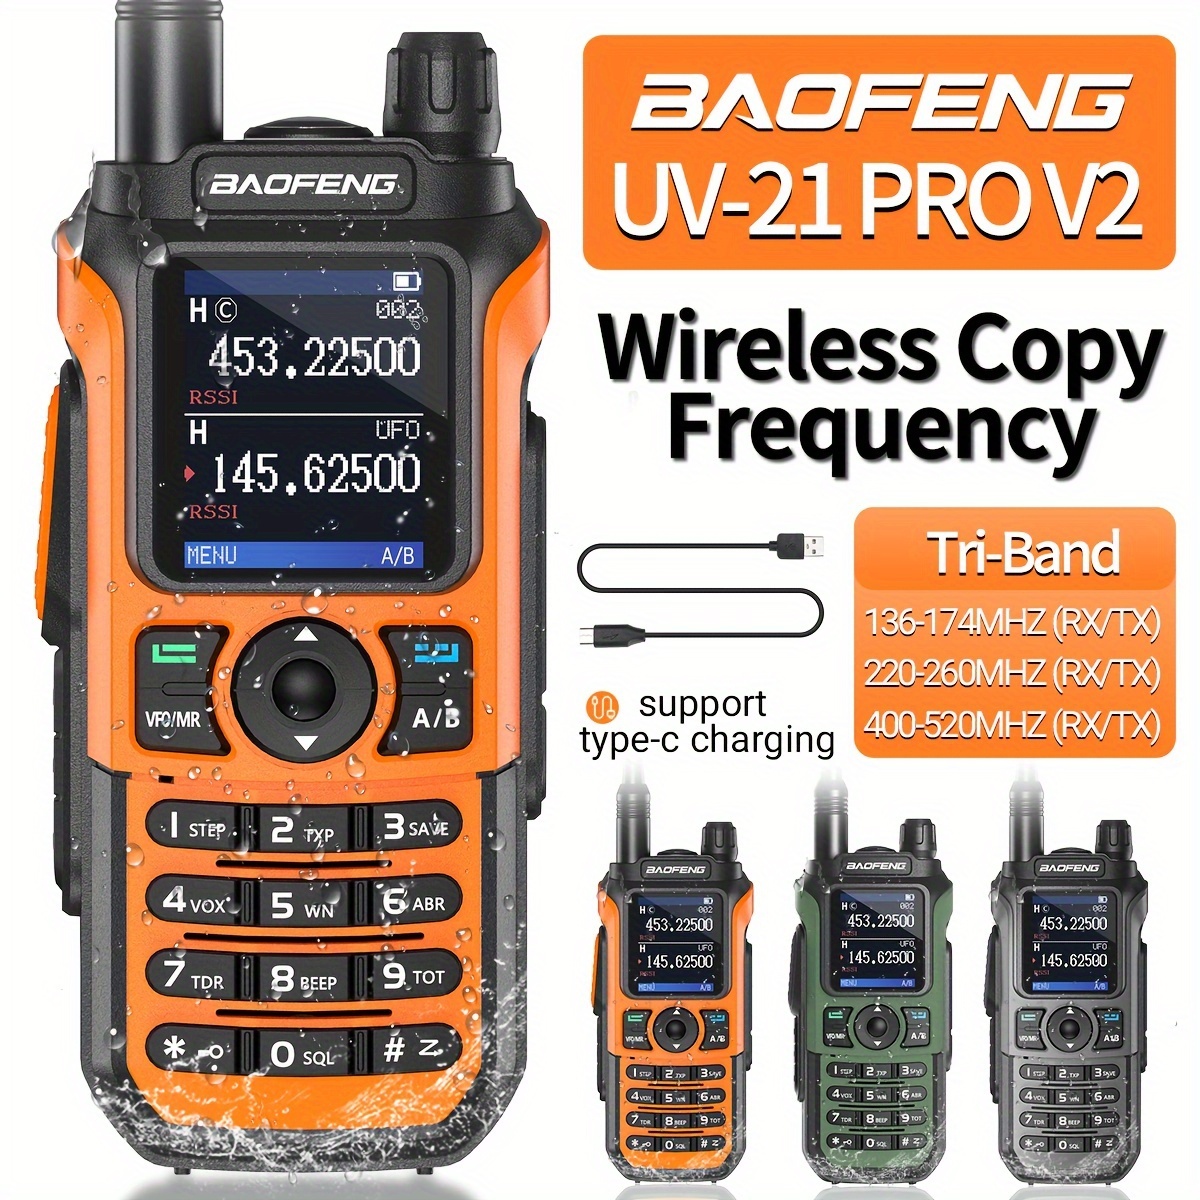 BaoFeng Radio UV-5R 8W 2Pack Handheld Ham Radios (VHF & UHF) with High Gain  Antenna and Programming Cable (2Pack) (M)